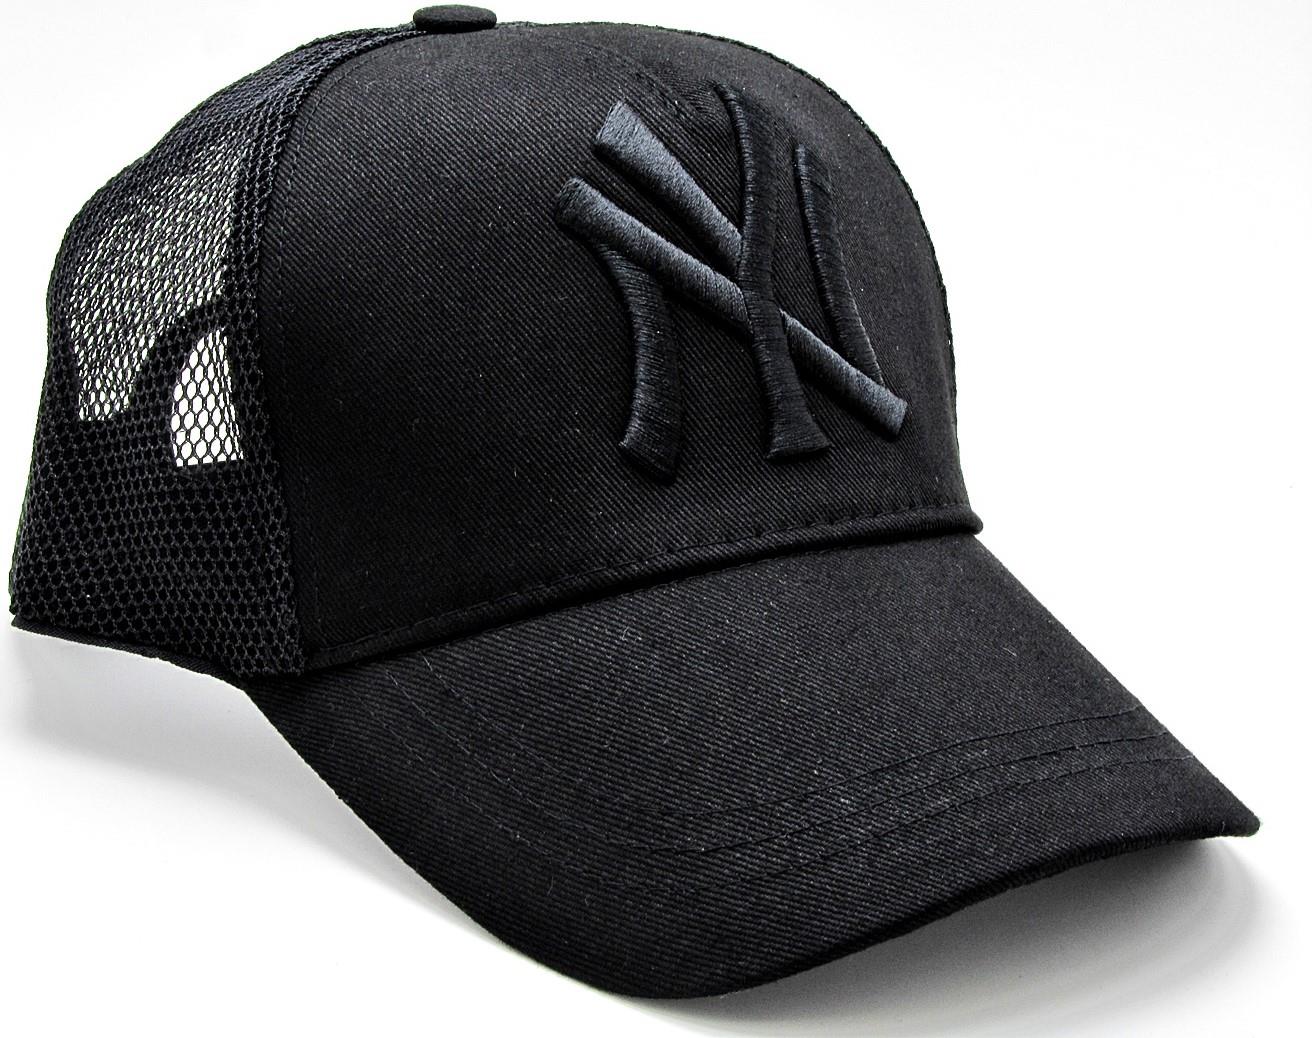 NY Cap Yazlık Fileli Unisex Şapka cp222 - Siyah Siyah Yazılı